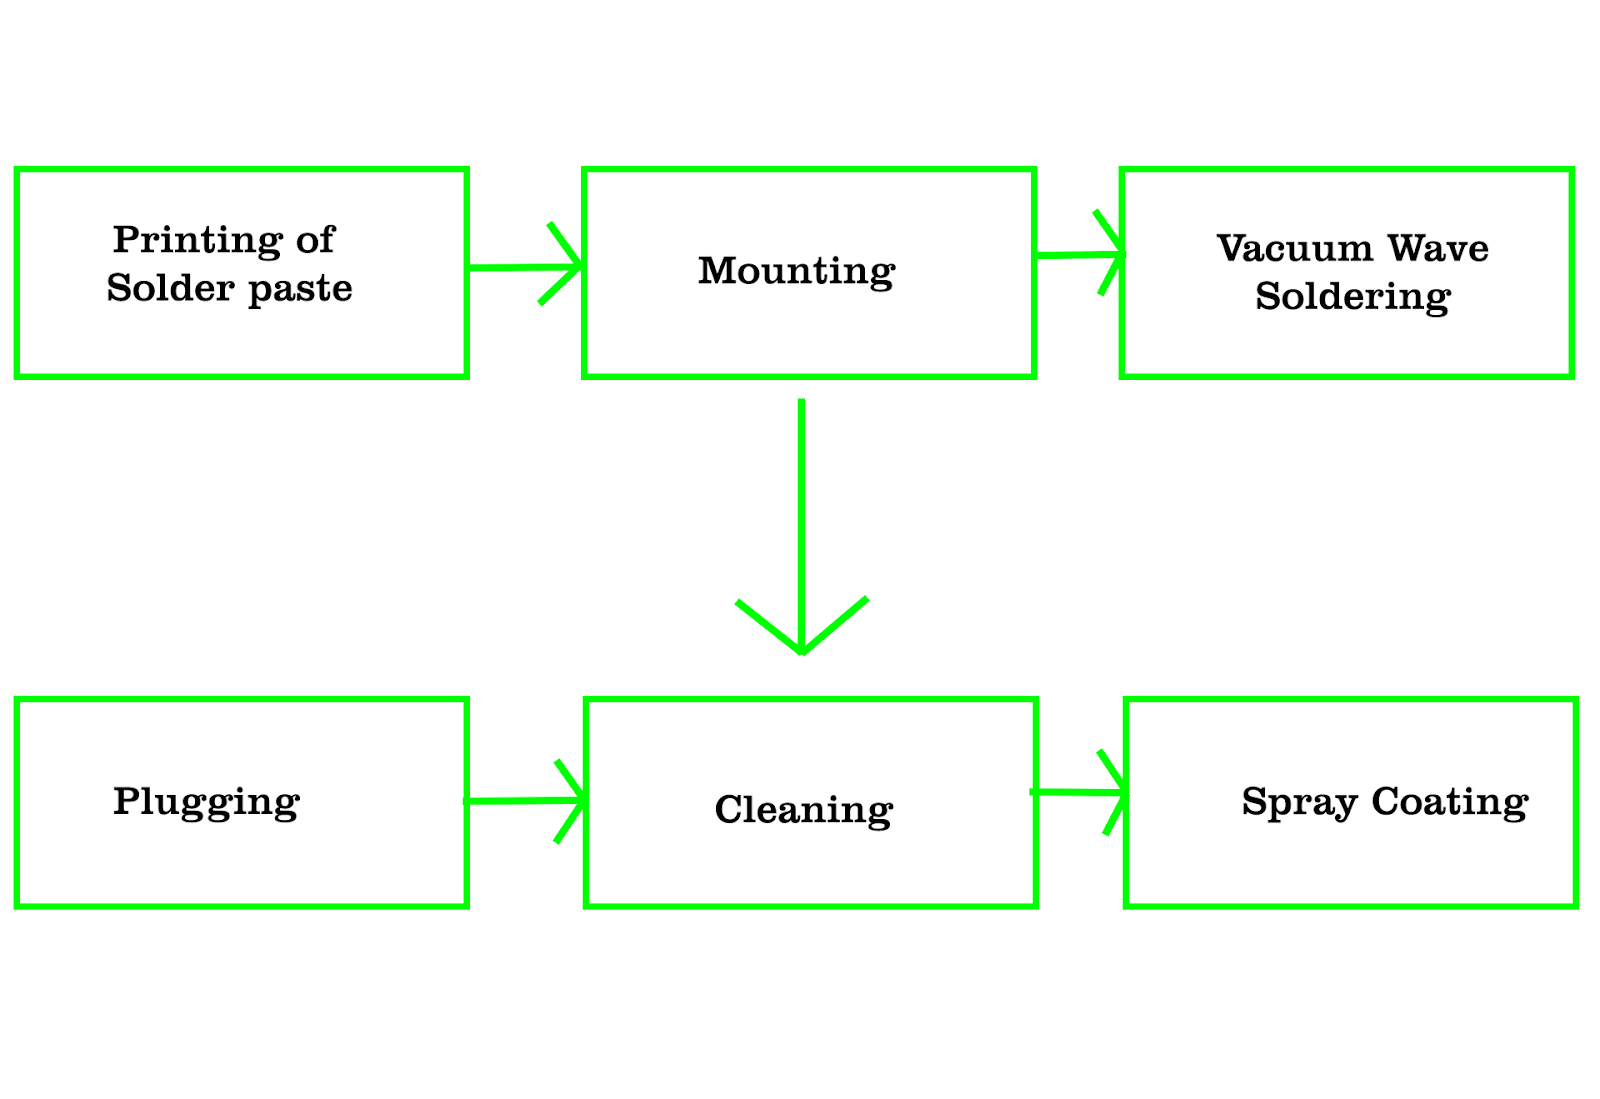 Workflow Process